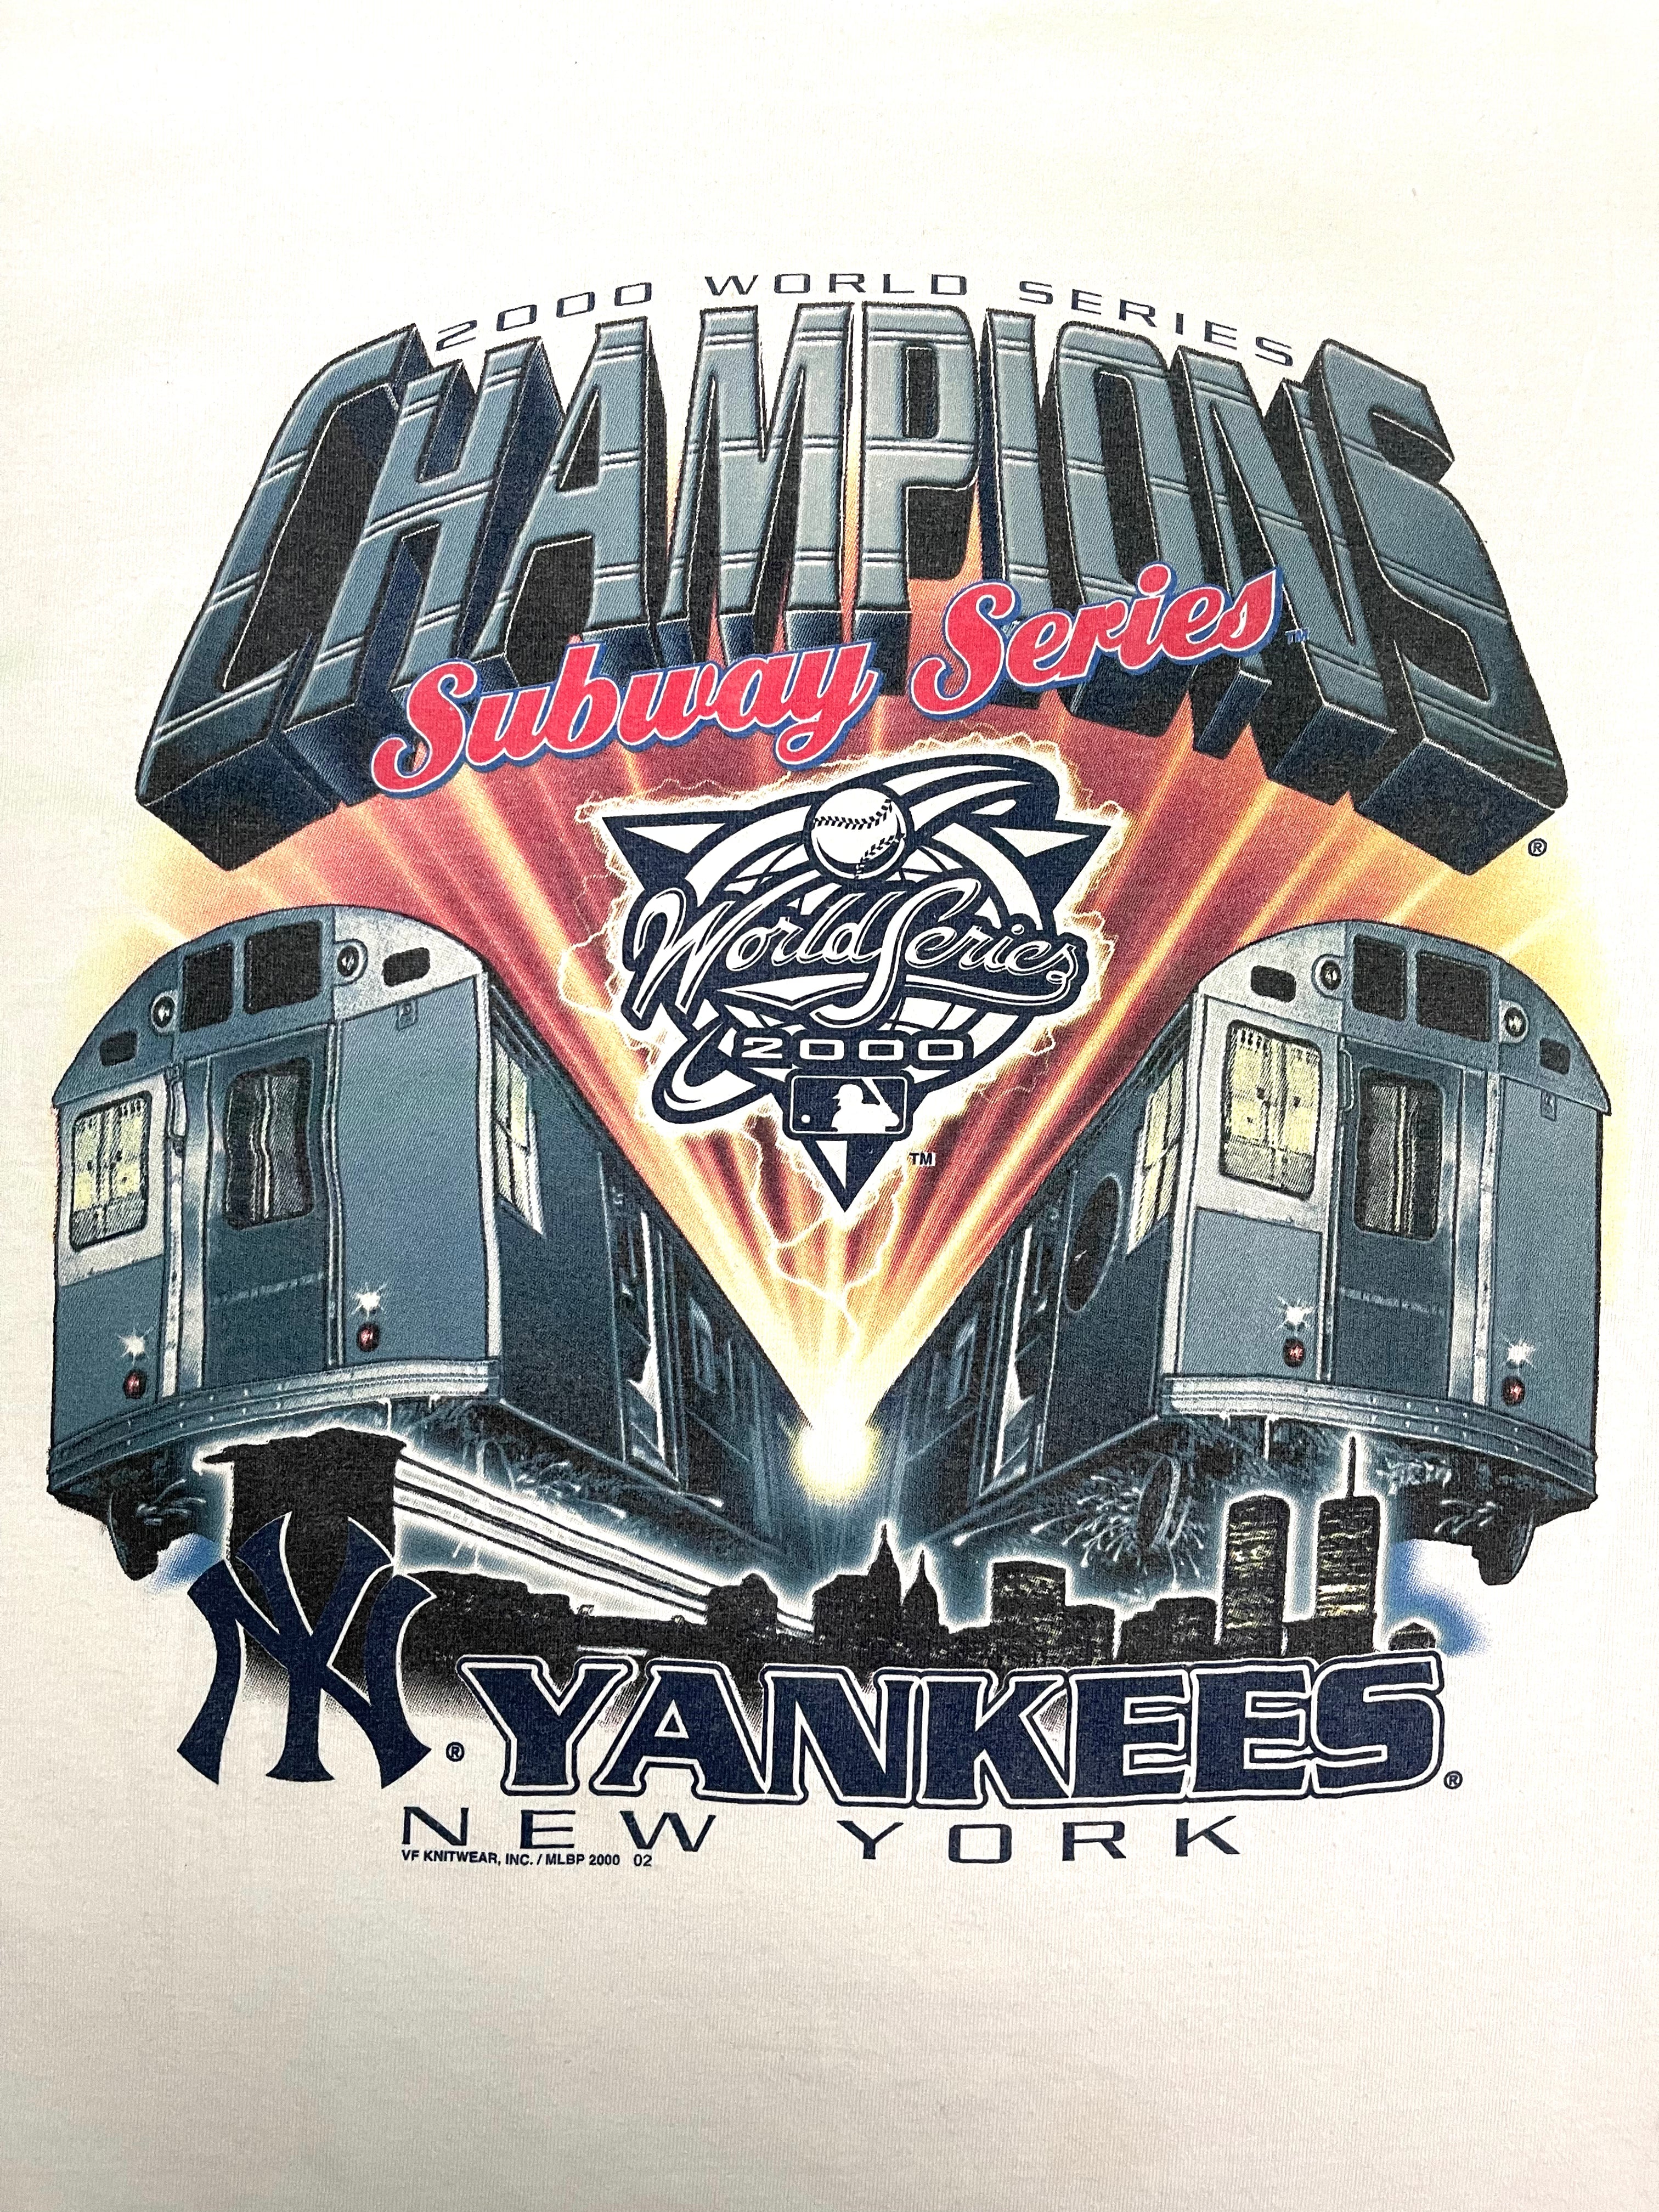 Vintage New York Yankees 1996 World Series Champion T Shirt -  Denmark